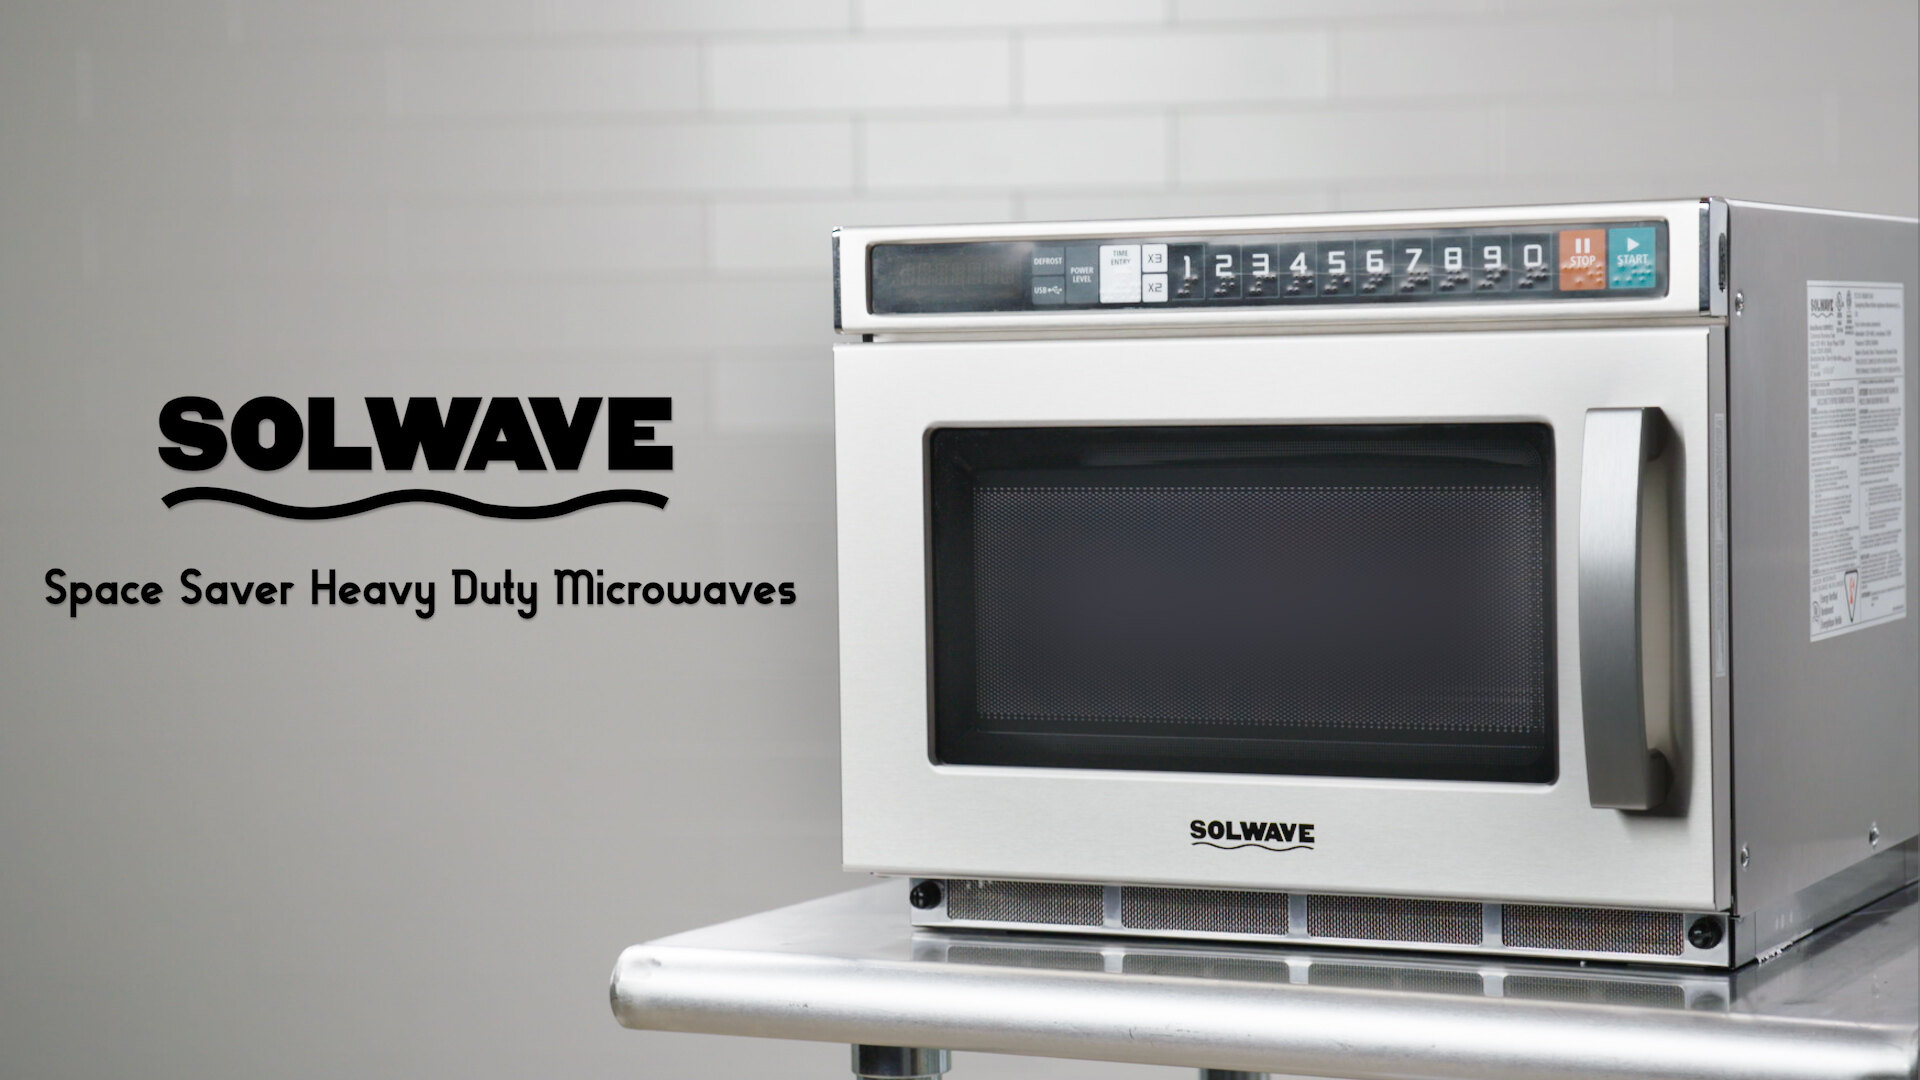 Amana Commercial Microwave (120V): WebstaurantStore